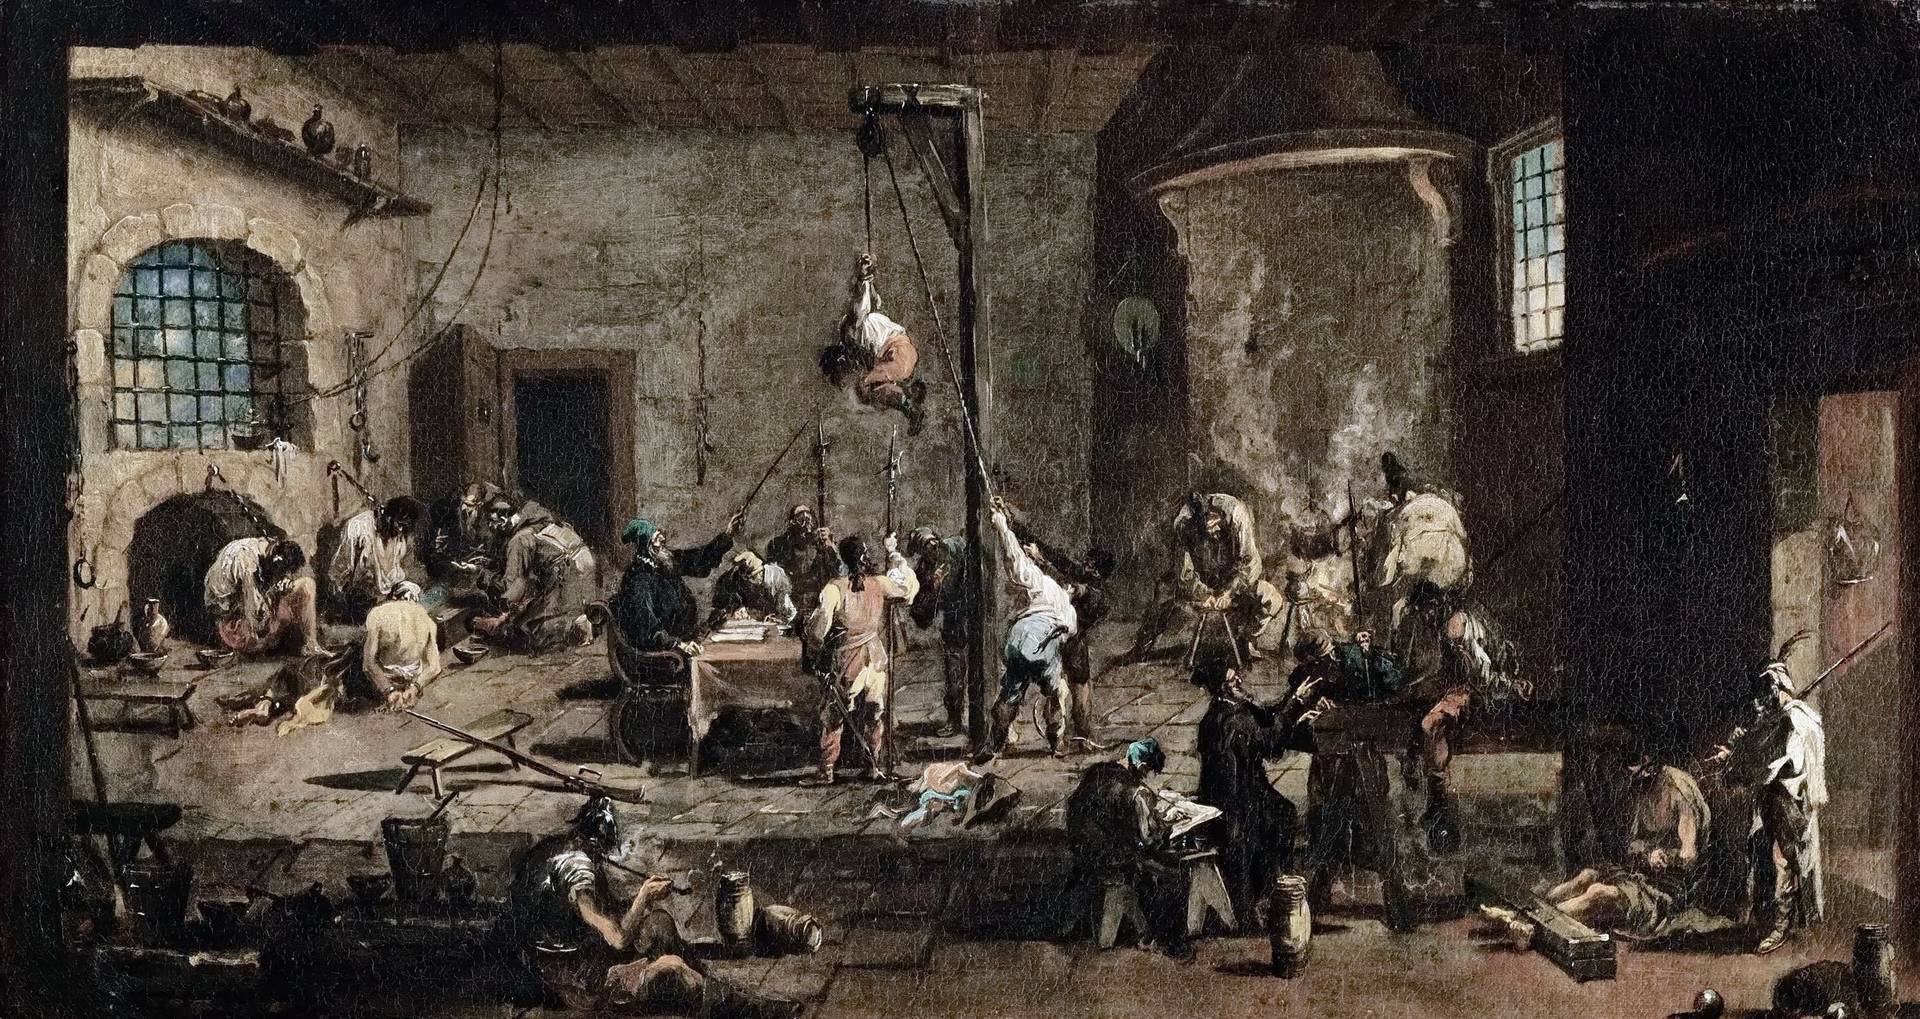 Алессандро Маньяско. Допрос с пытками в тюрьме инквизиции. 1710-е